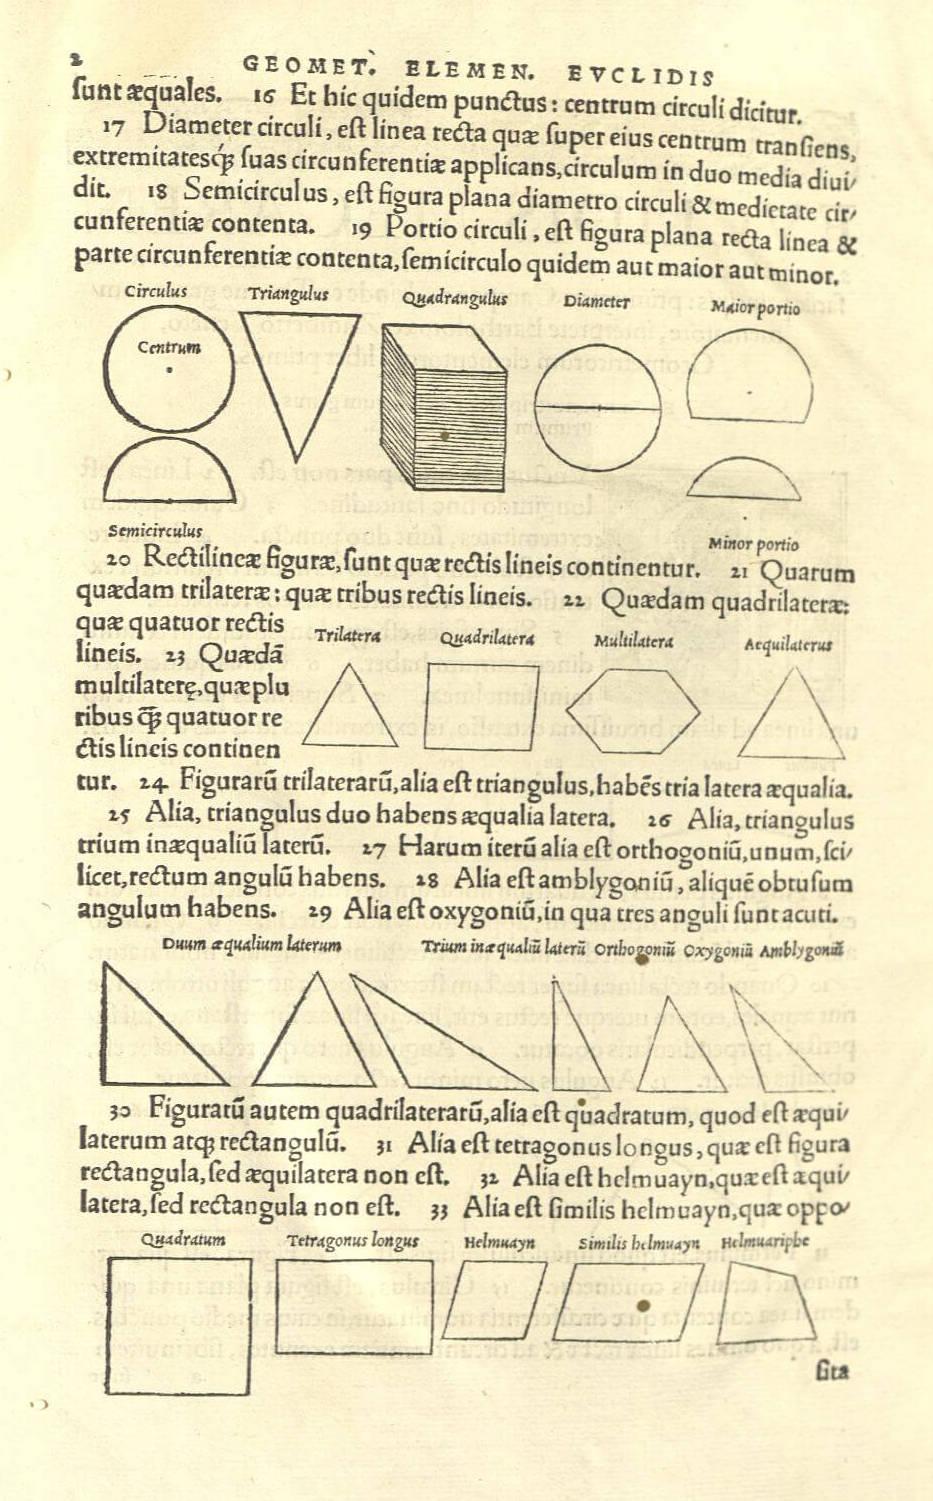 Euclidis Megarensis Mathematici Clarissimi Elementorum geometricorum Lib. XV